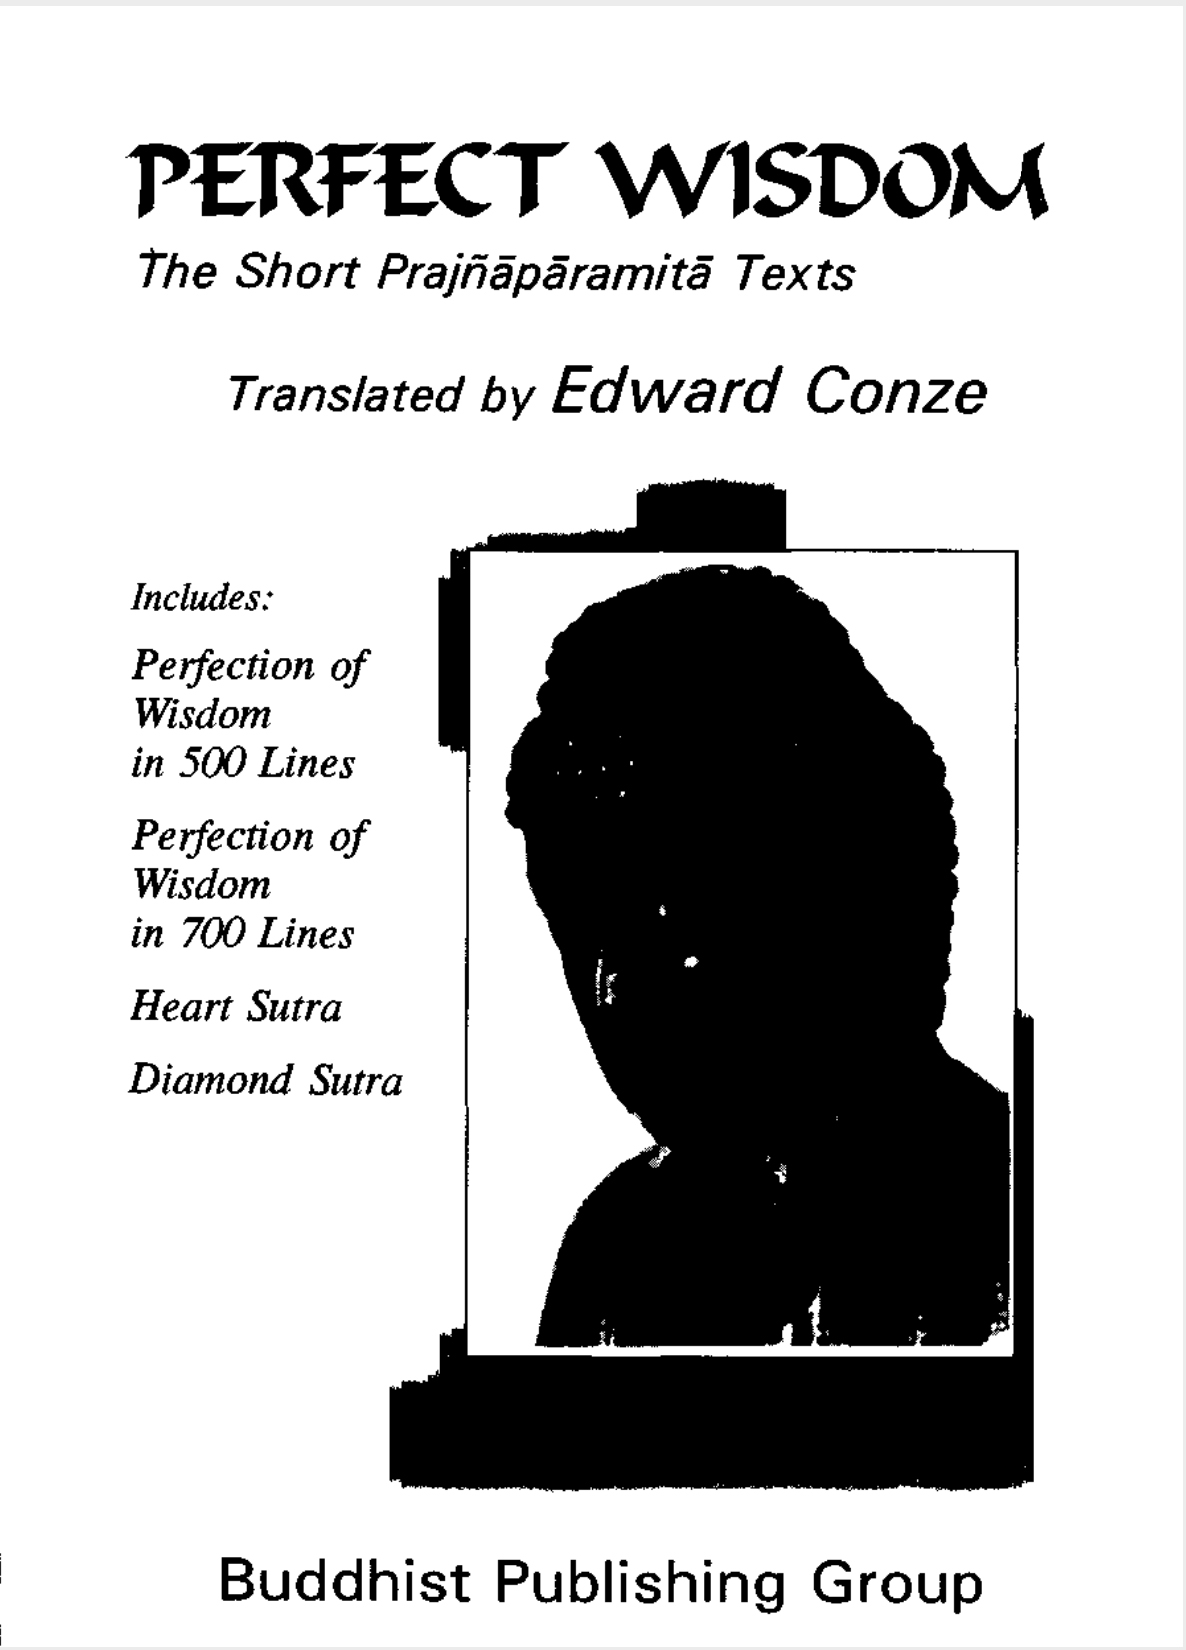 Perfect Wisdom The Short Prajnaparamita Texts 1973-front.jpg